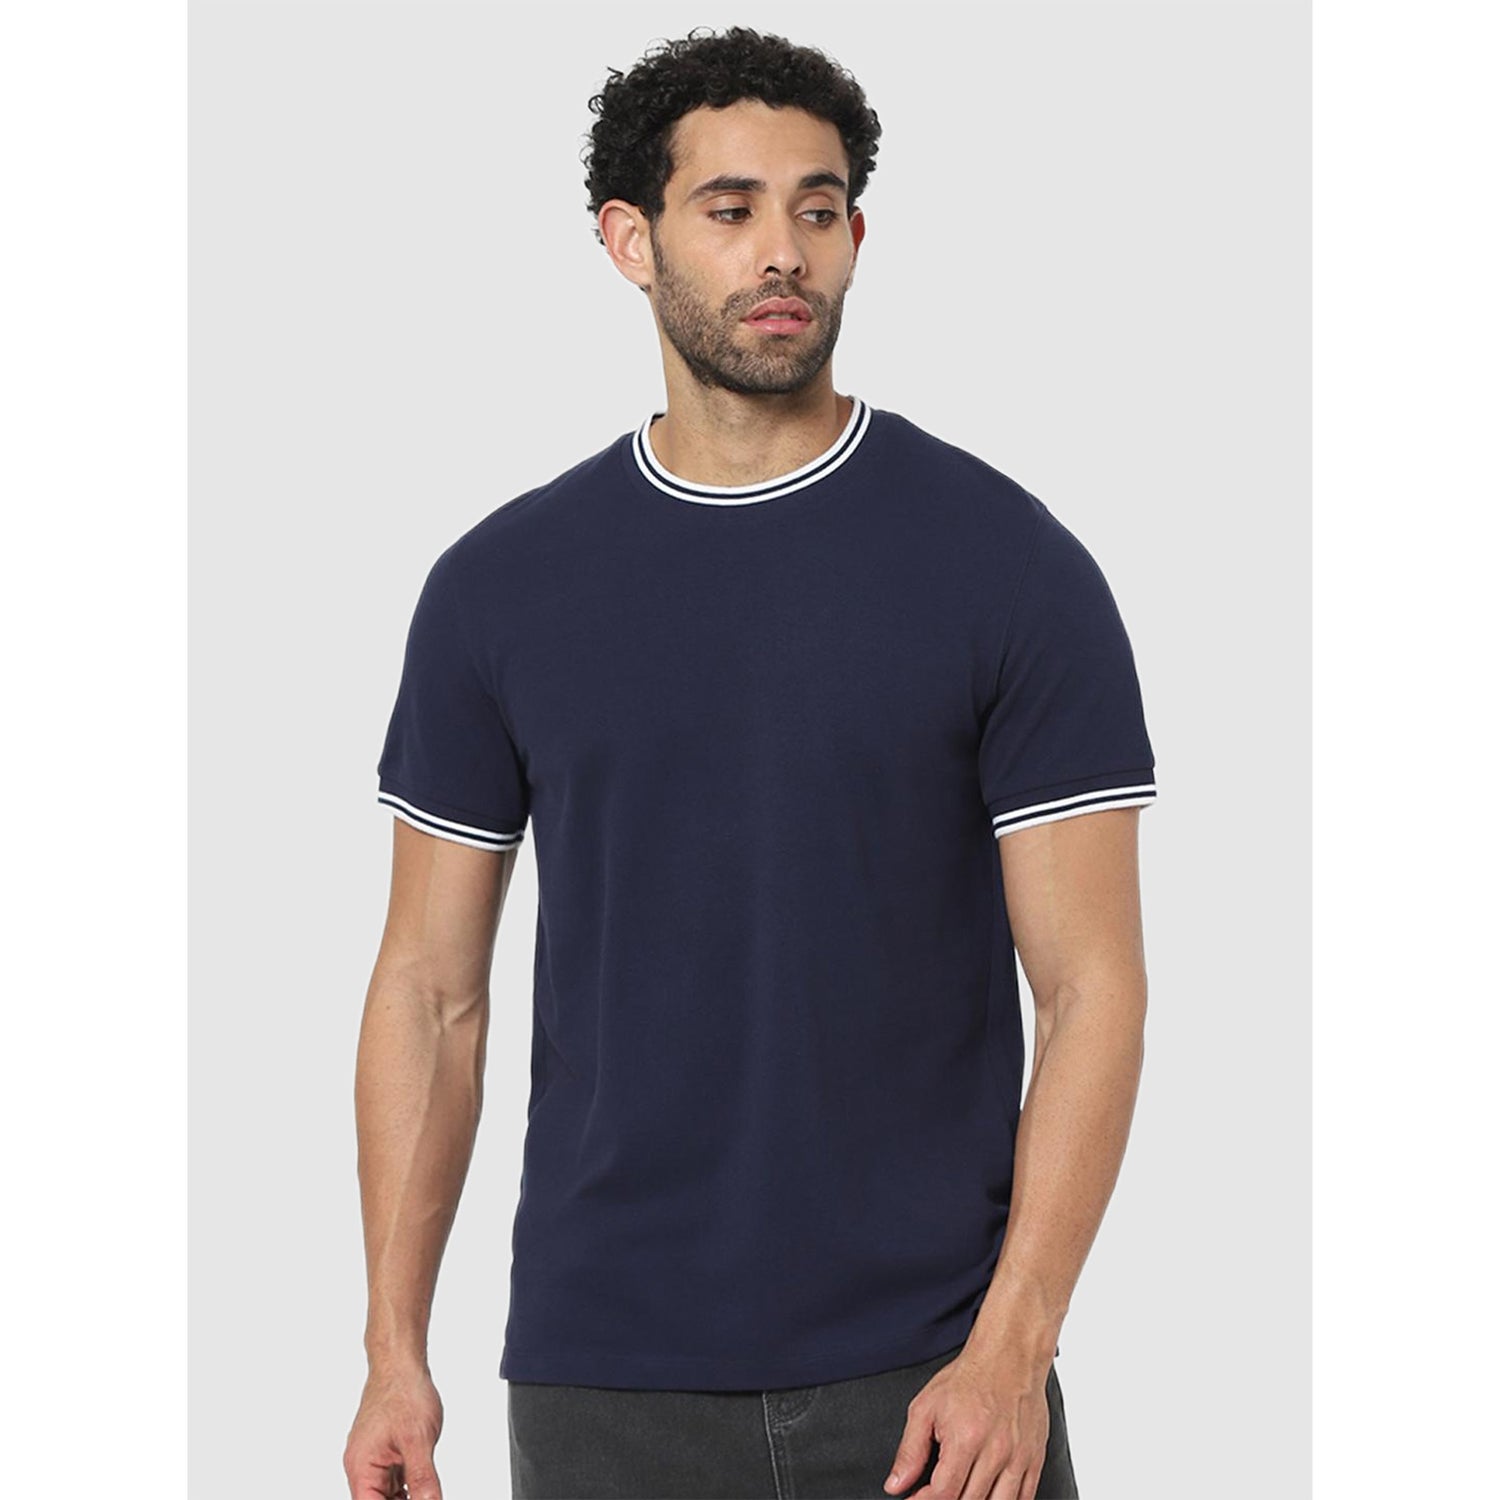 Navy Blue Solid Regular Fit Cotton T-shirt (BEPIQUO)